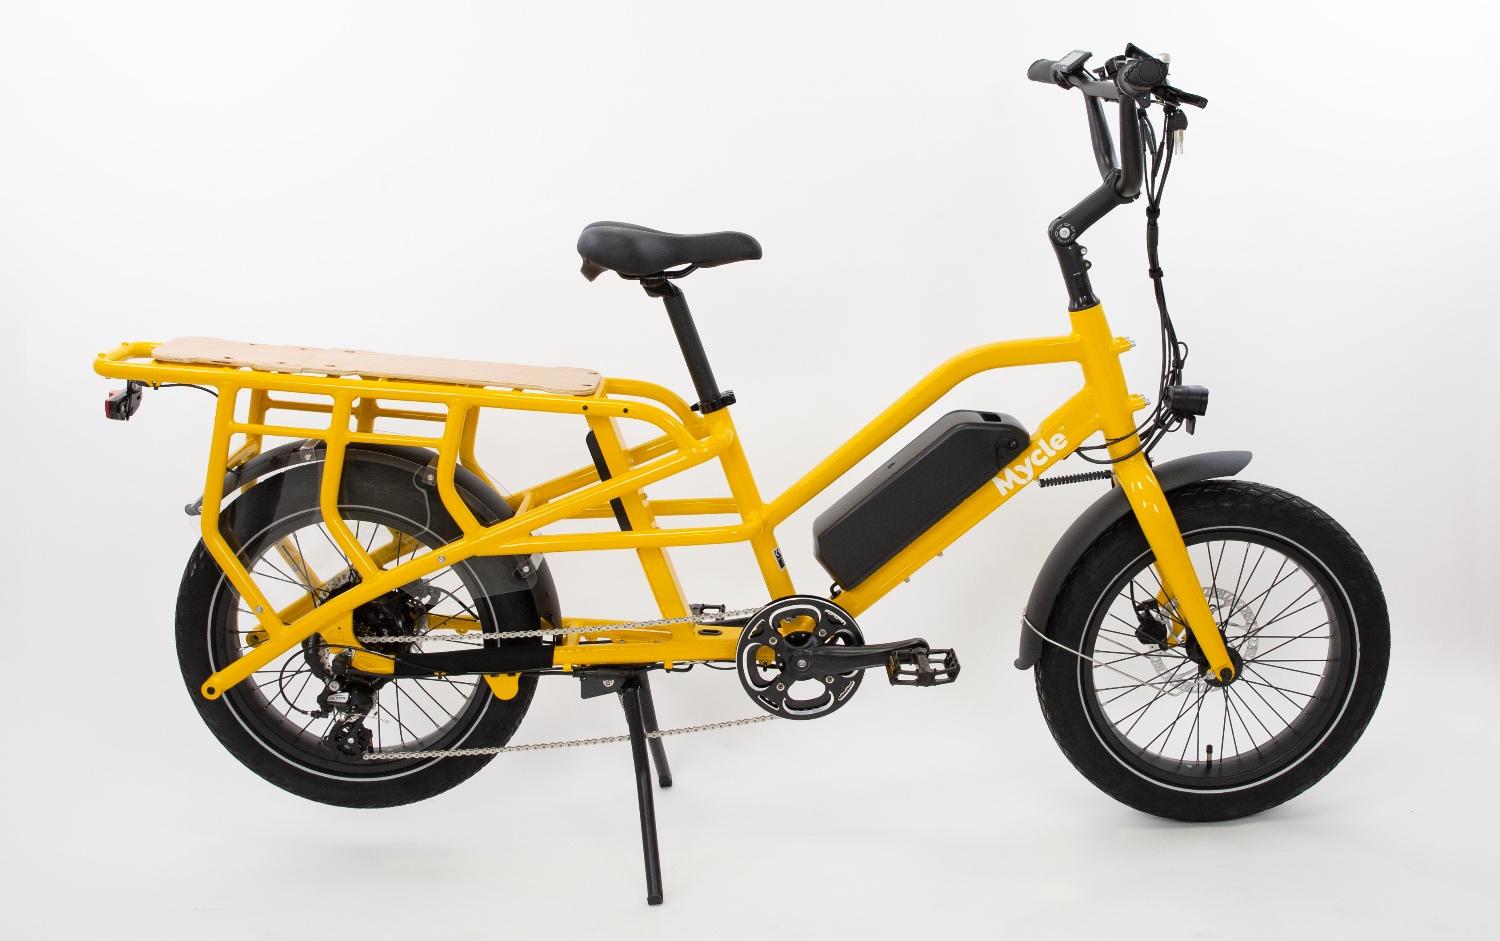 New Mycle cargo bike - yellow